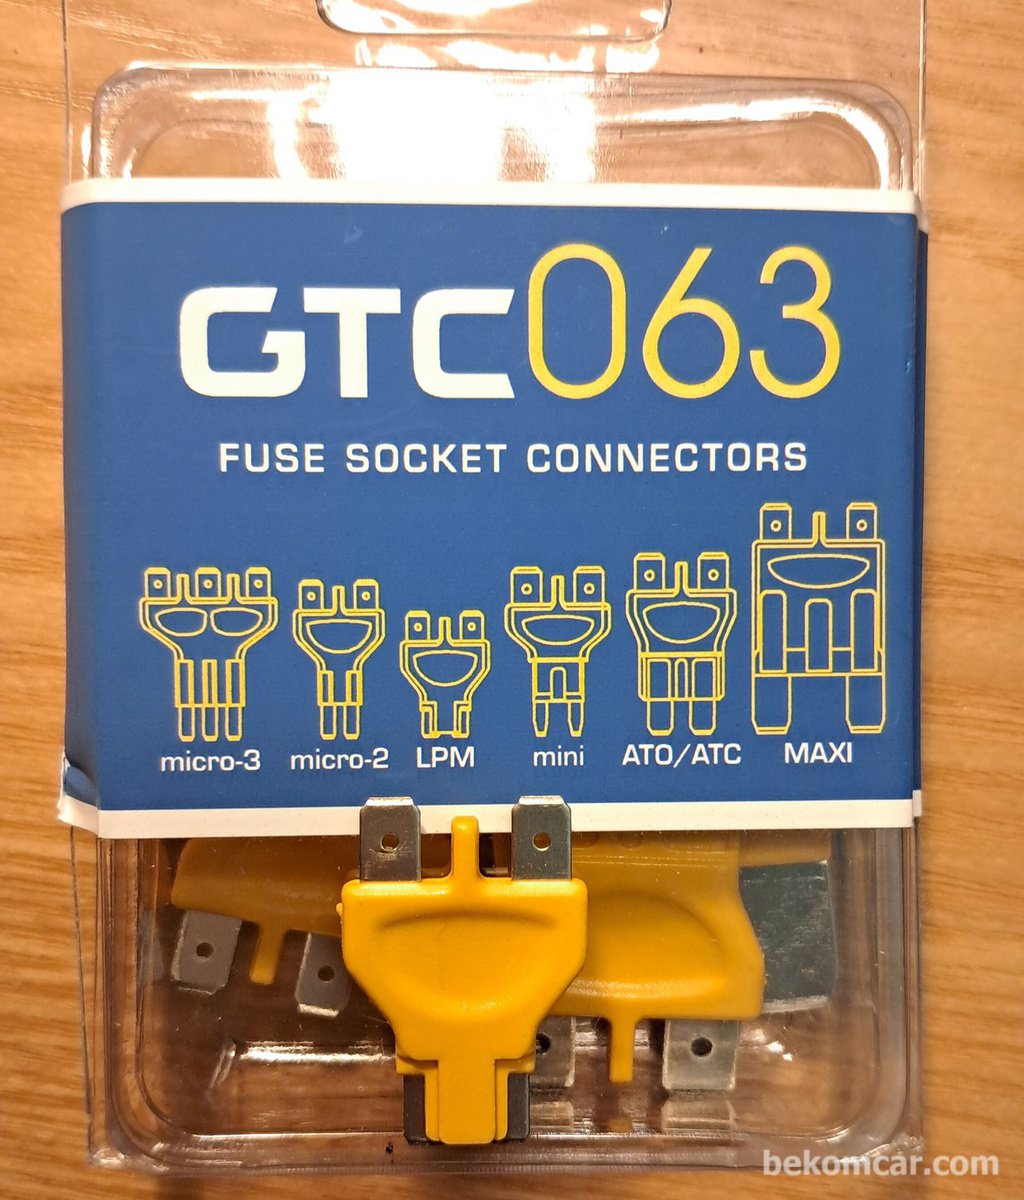 GTC063 Fuse Socket Connector Kit by GTC, General Technologies Corp|베콤카 (bekomcar.com)